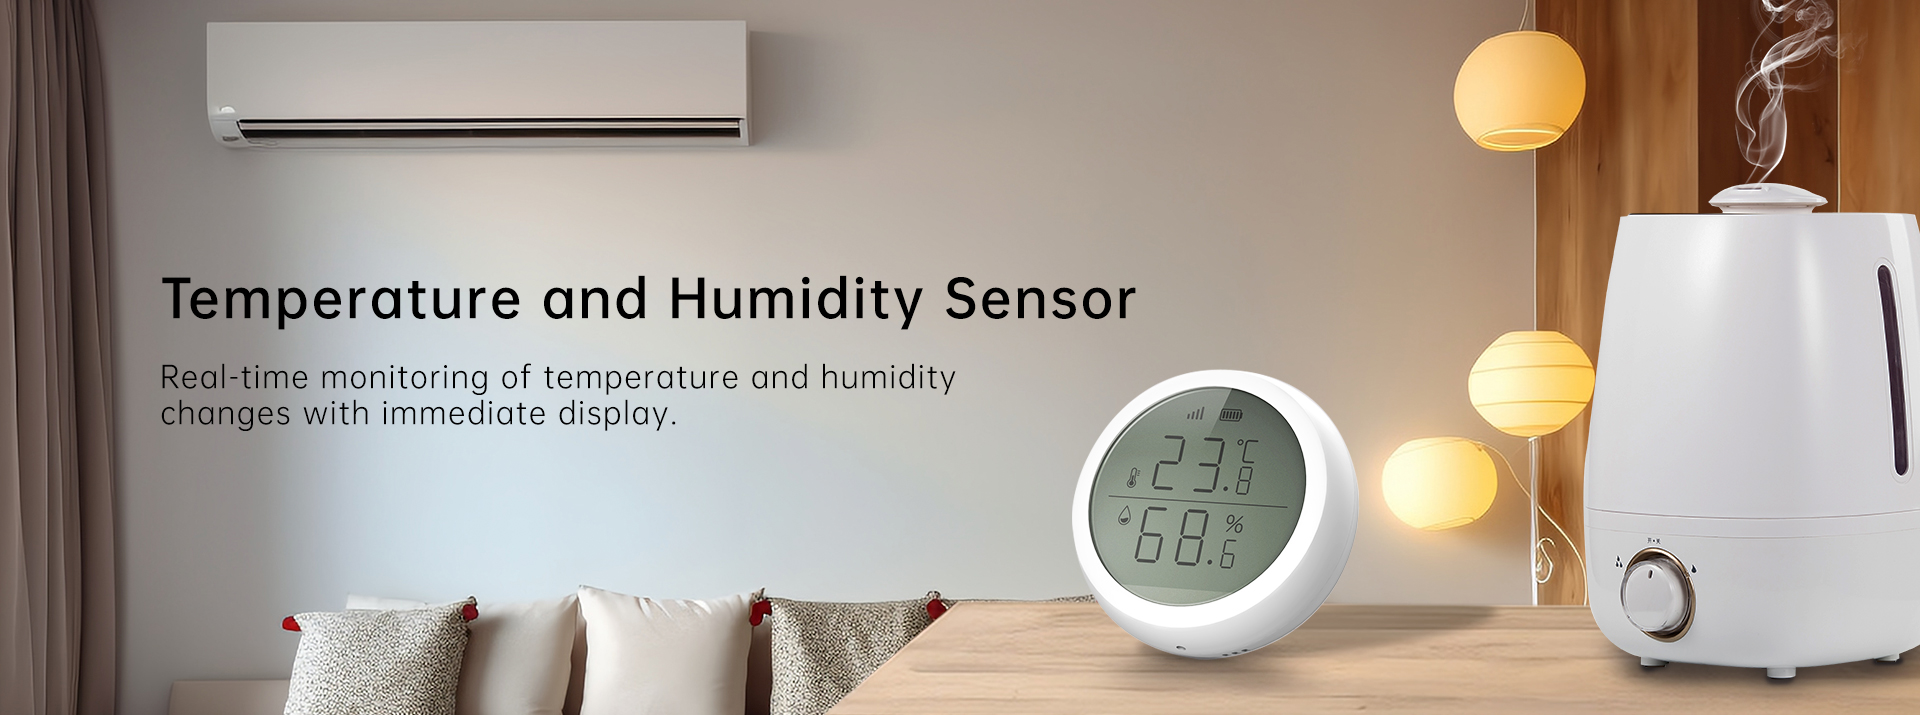 Temperature-and-Humidity-Sensor